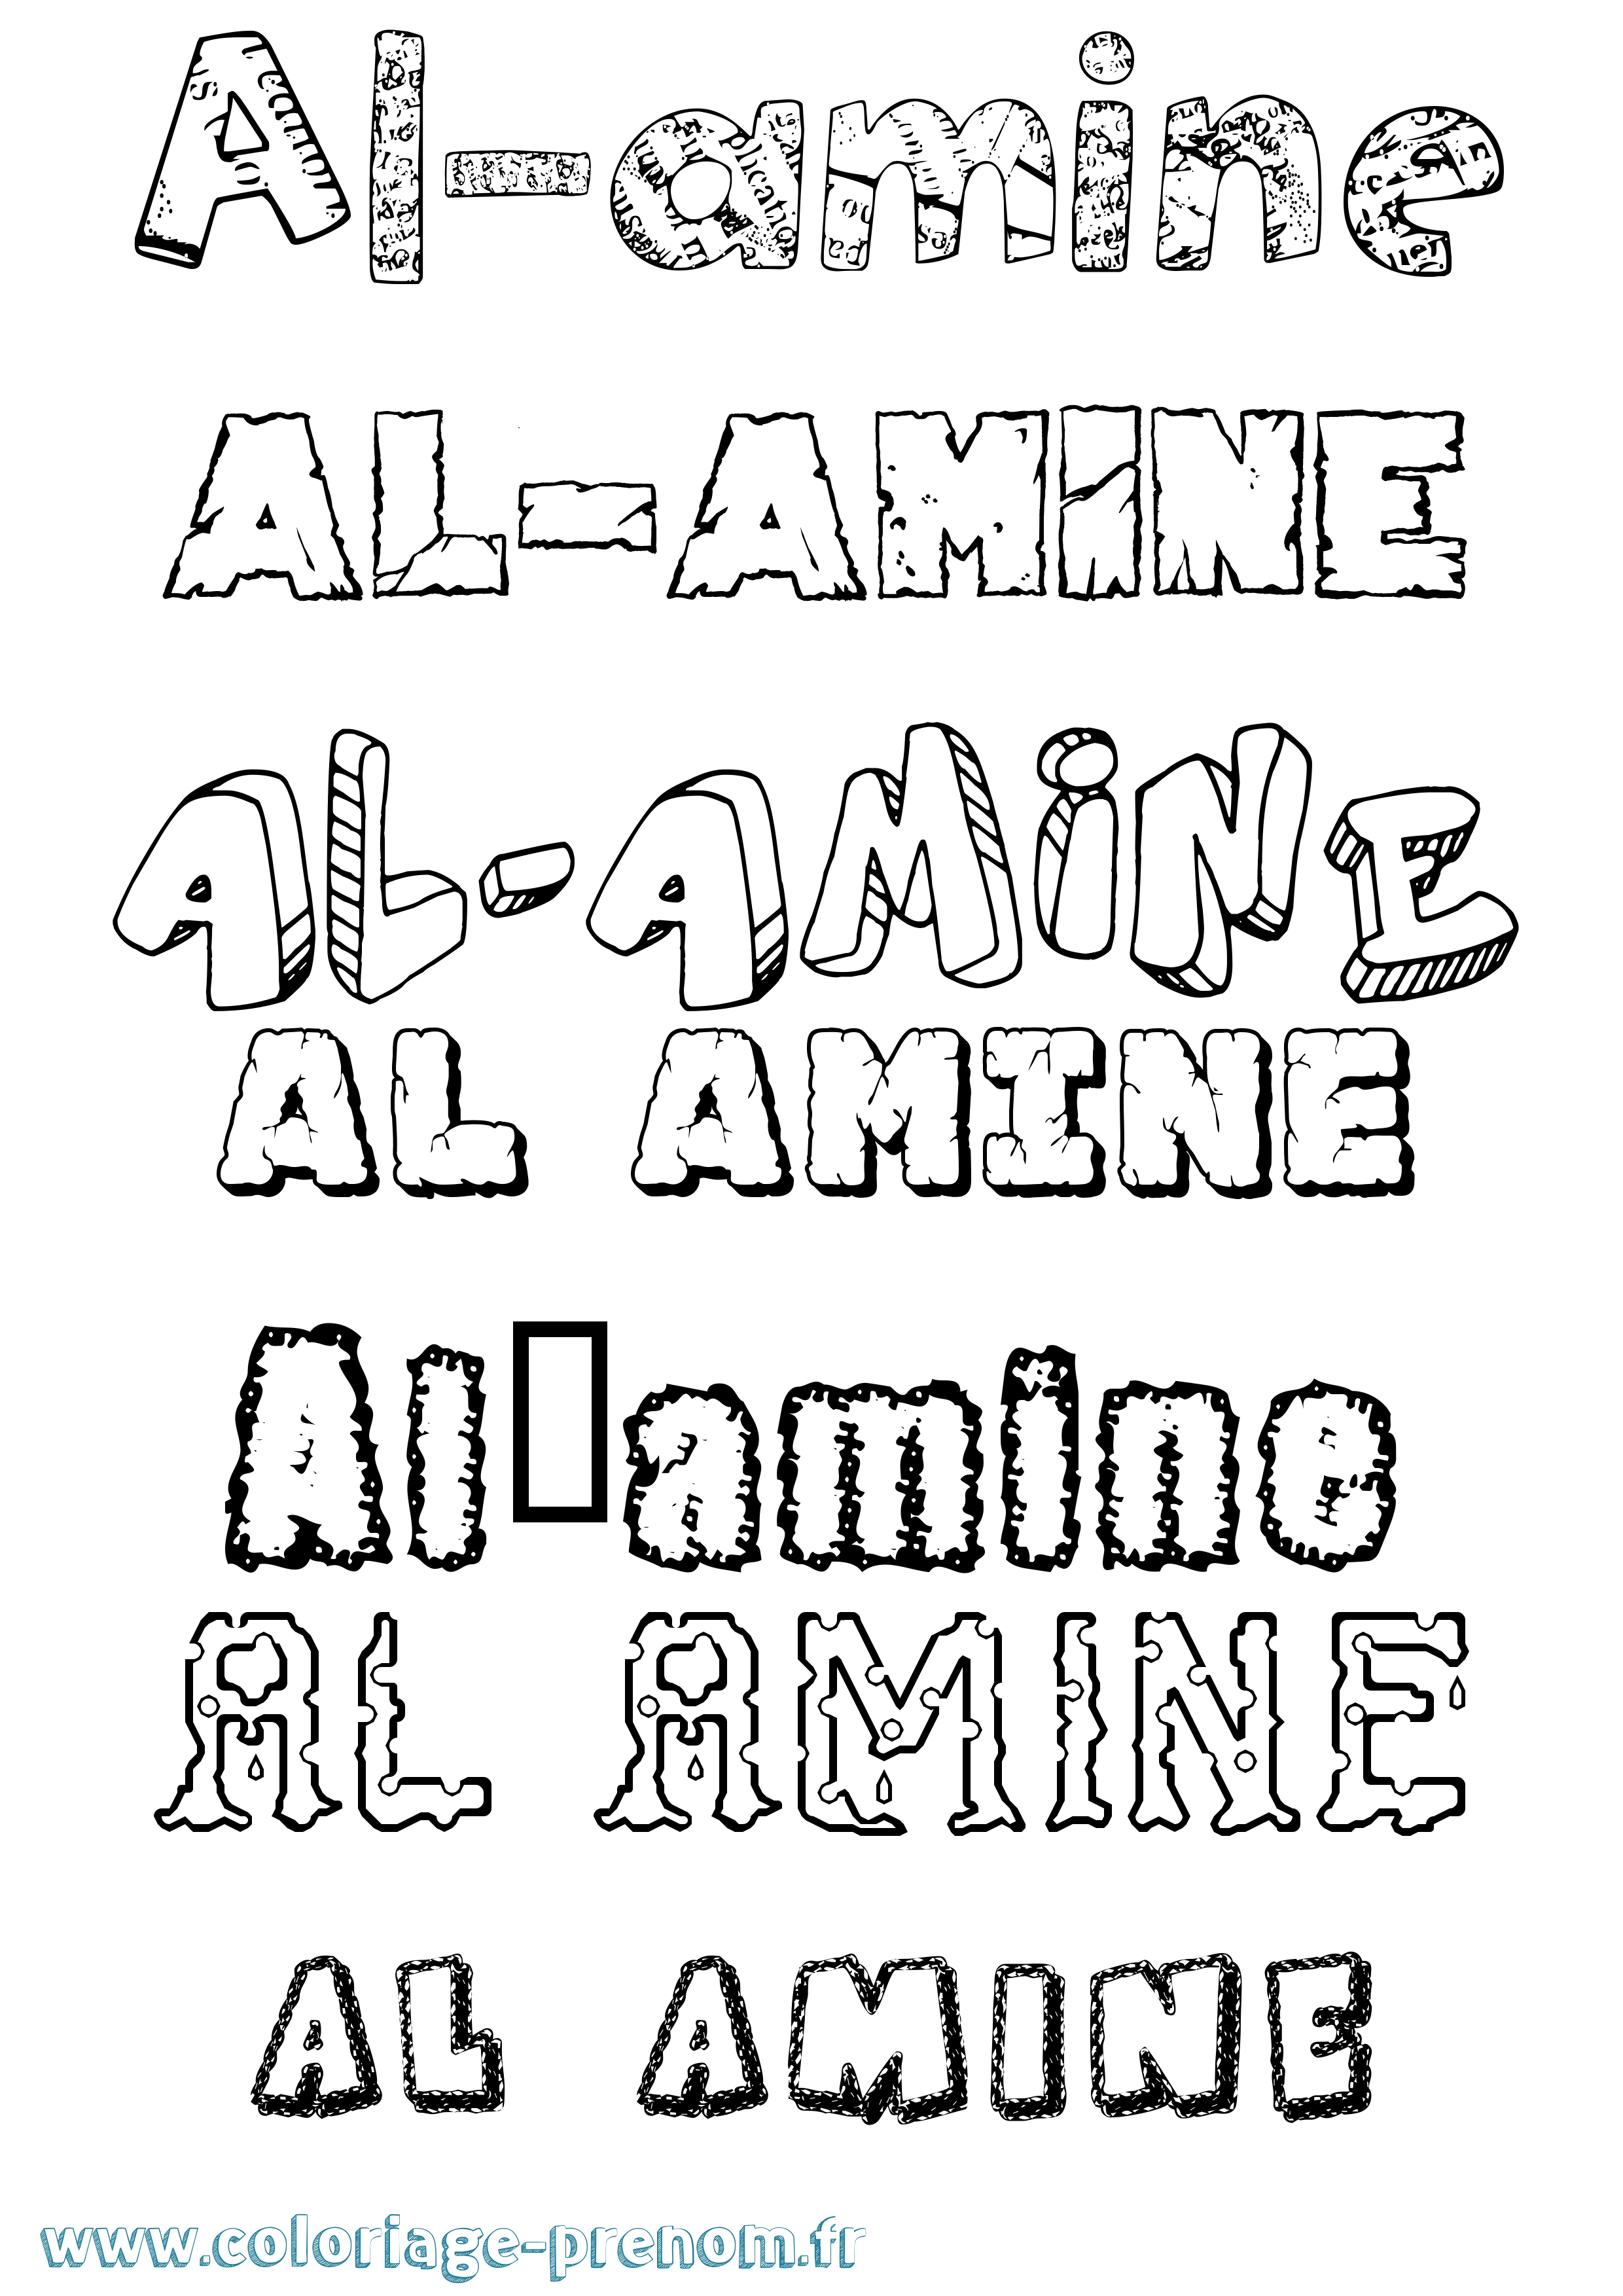 Coloriage prénom Al-Amine Destructuré